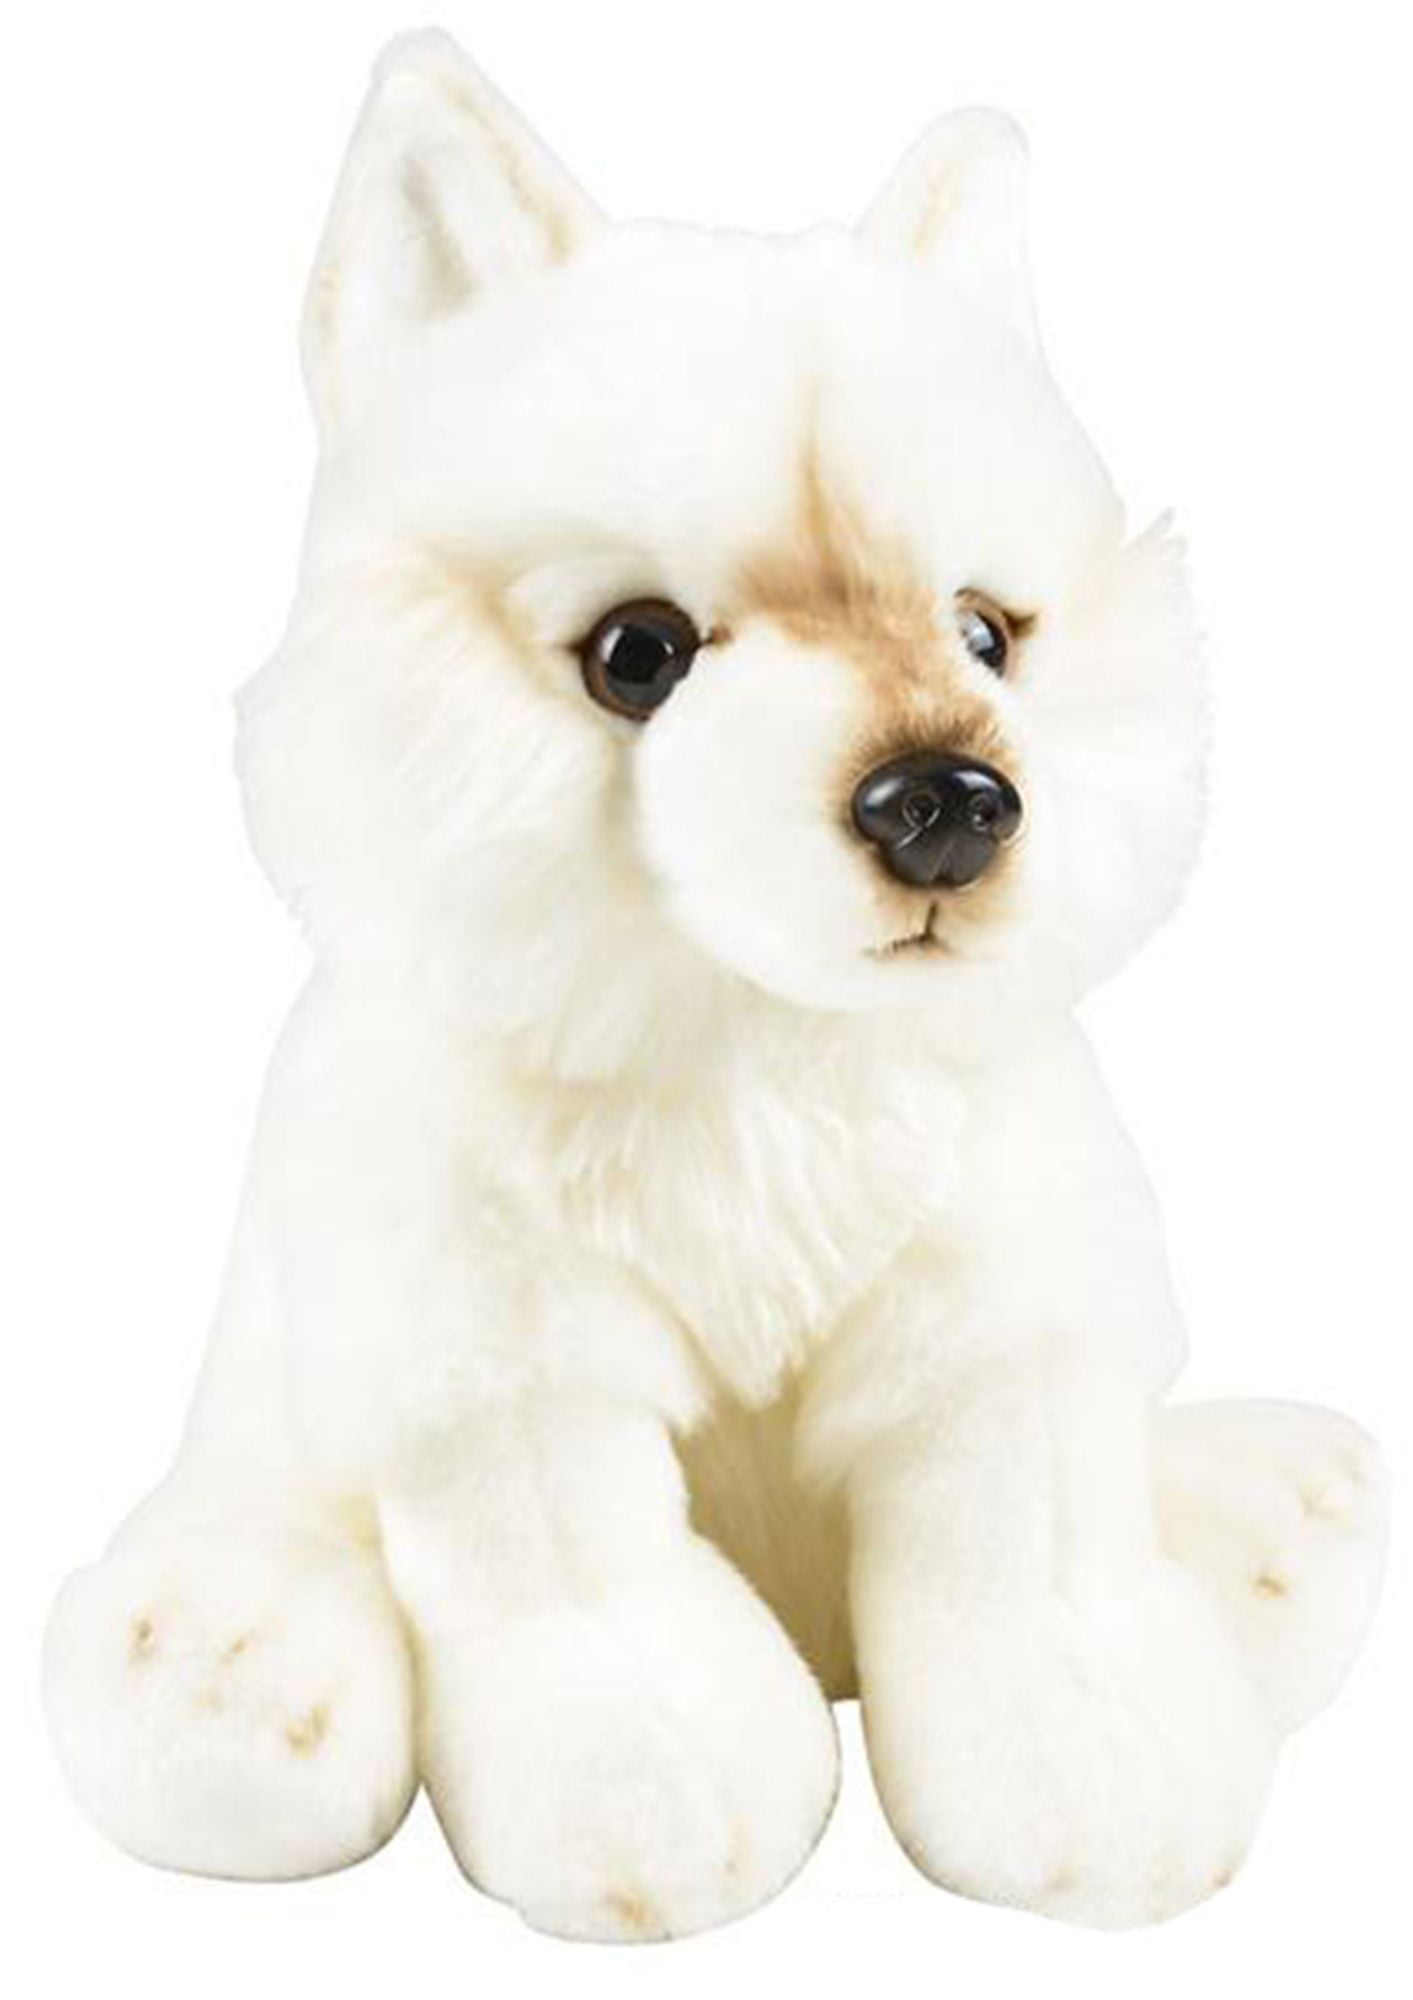 stuffed arctic fox plush animal